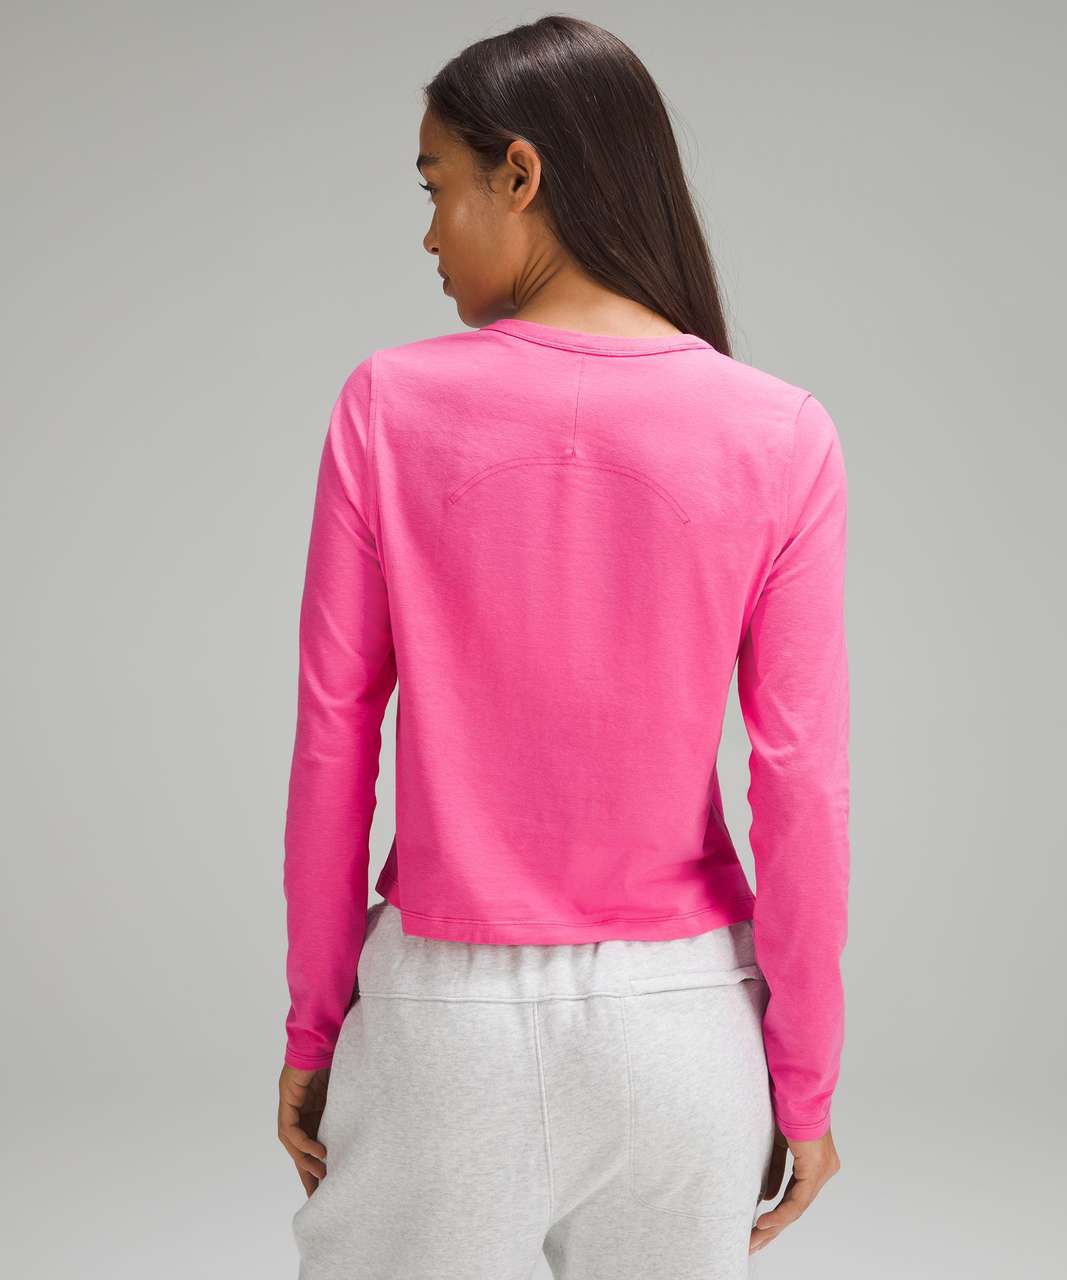 Lululemon Classic-Fit Cotton-Blend Long-Sleeve Shirt - Sonic Pink